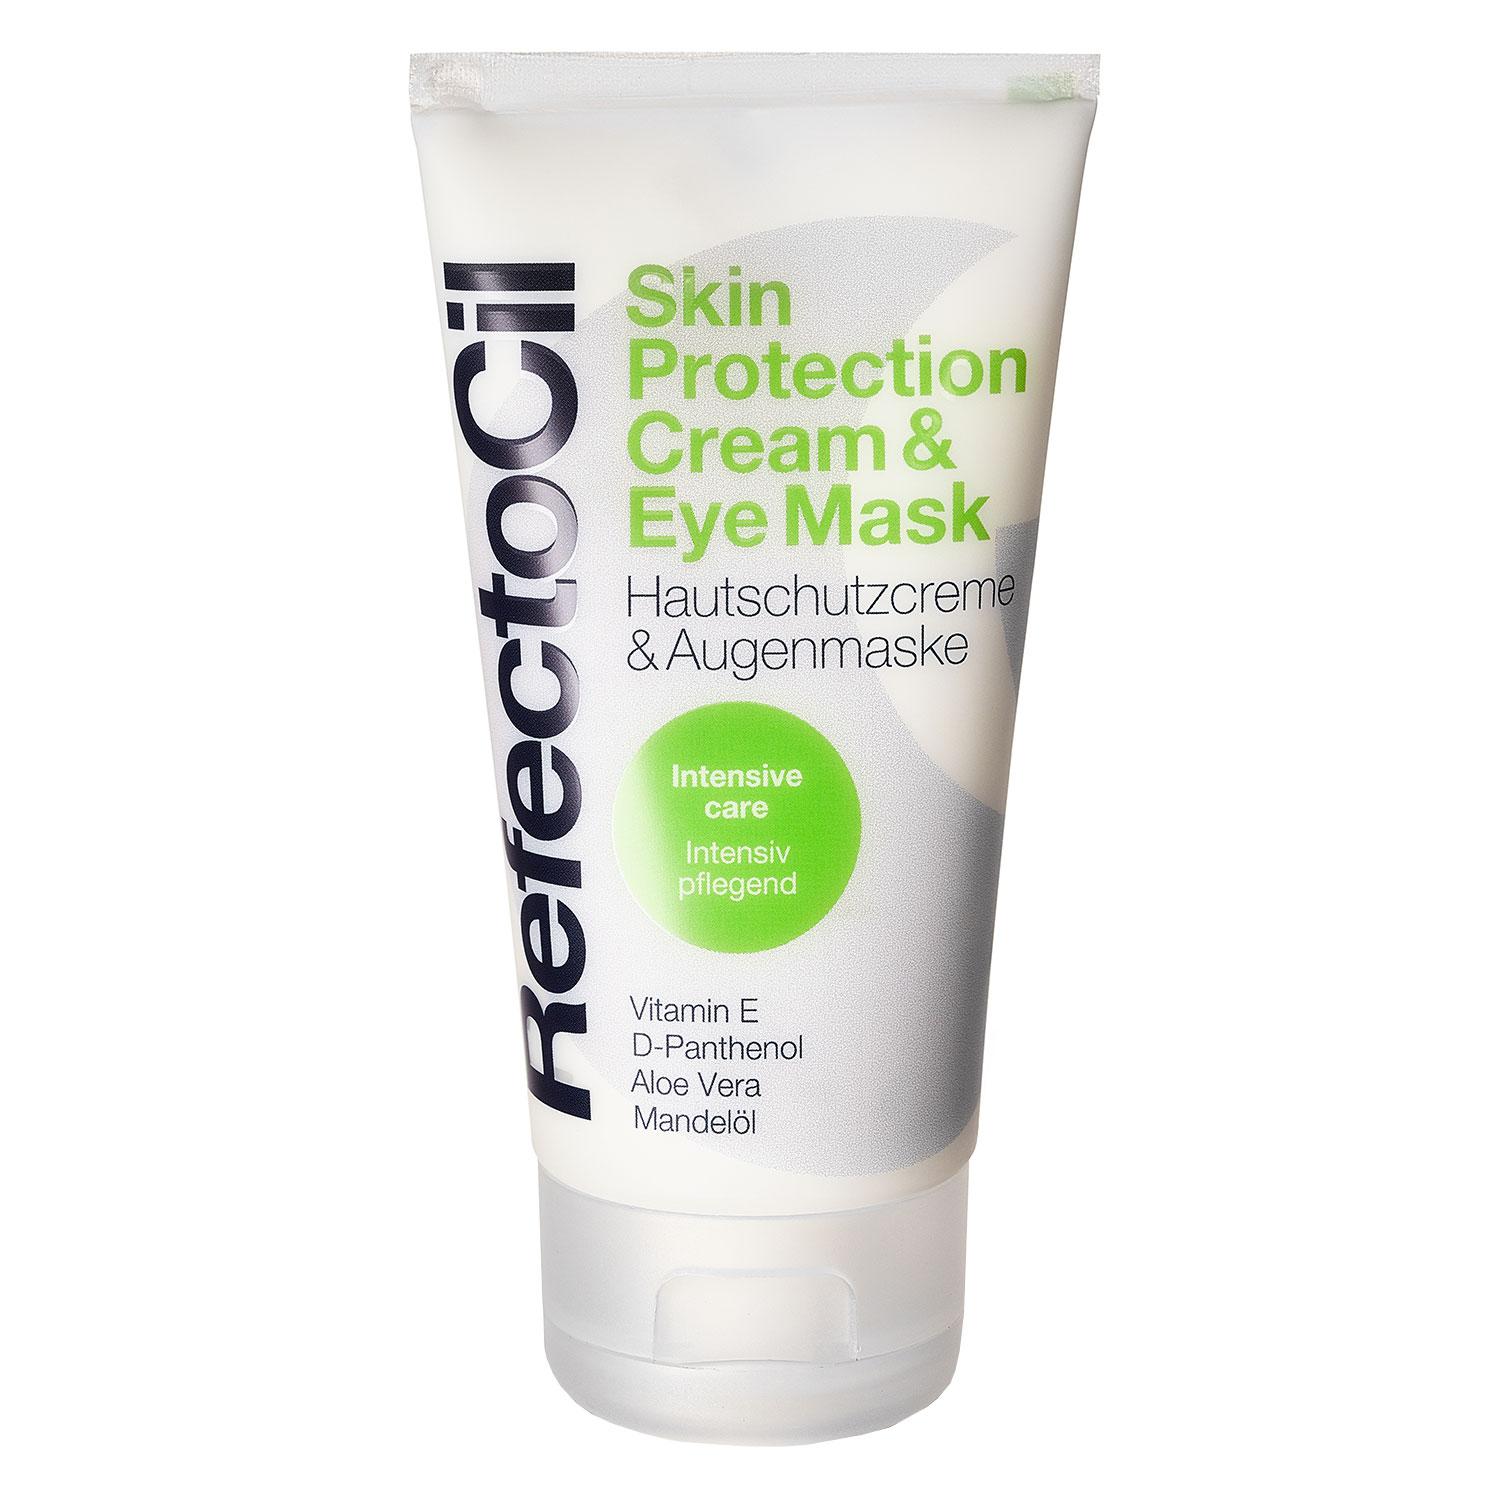 RefectoCil - Skin Protection Cream & Eye Mask